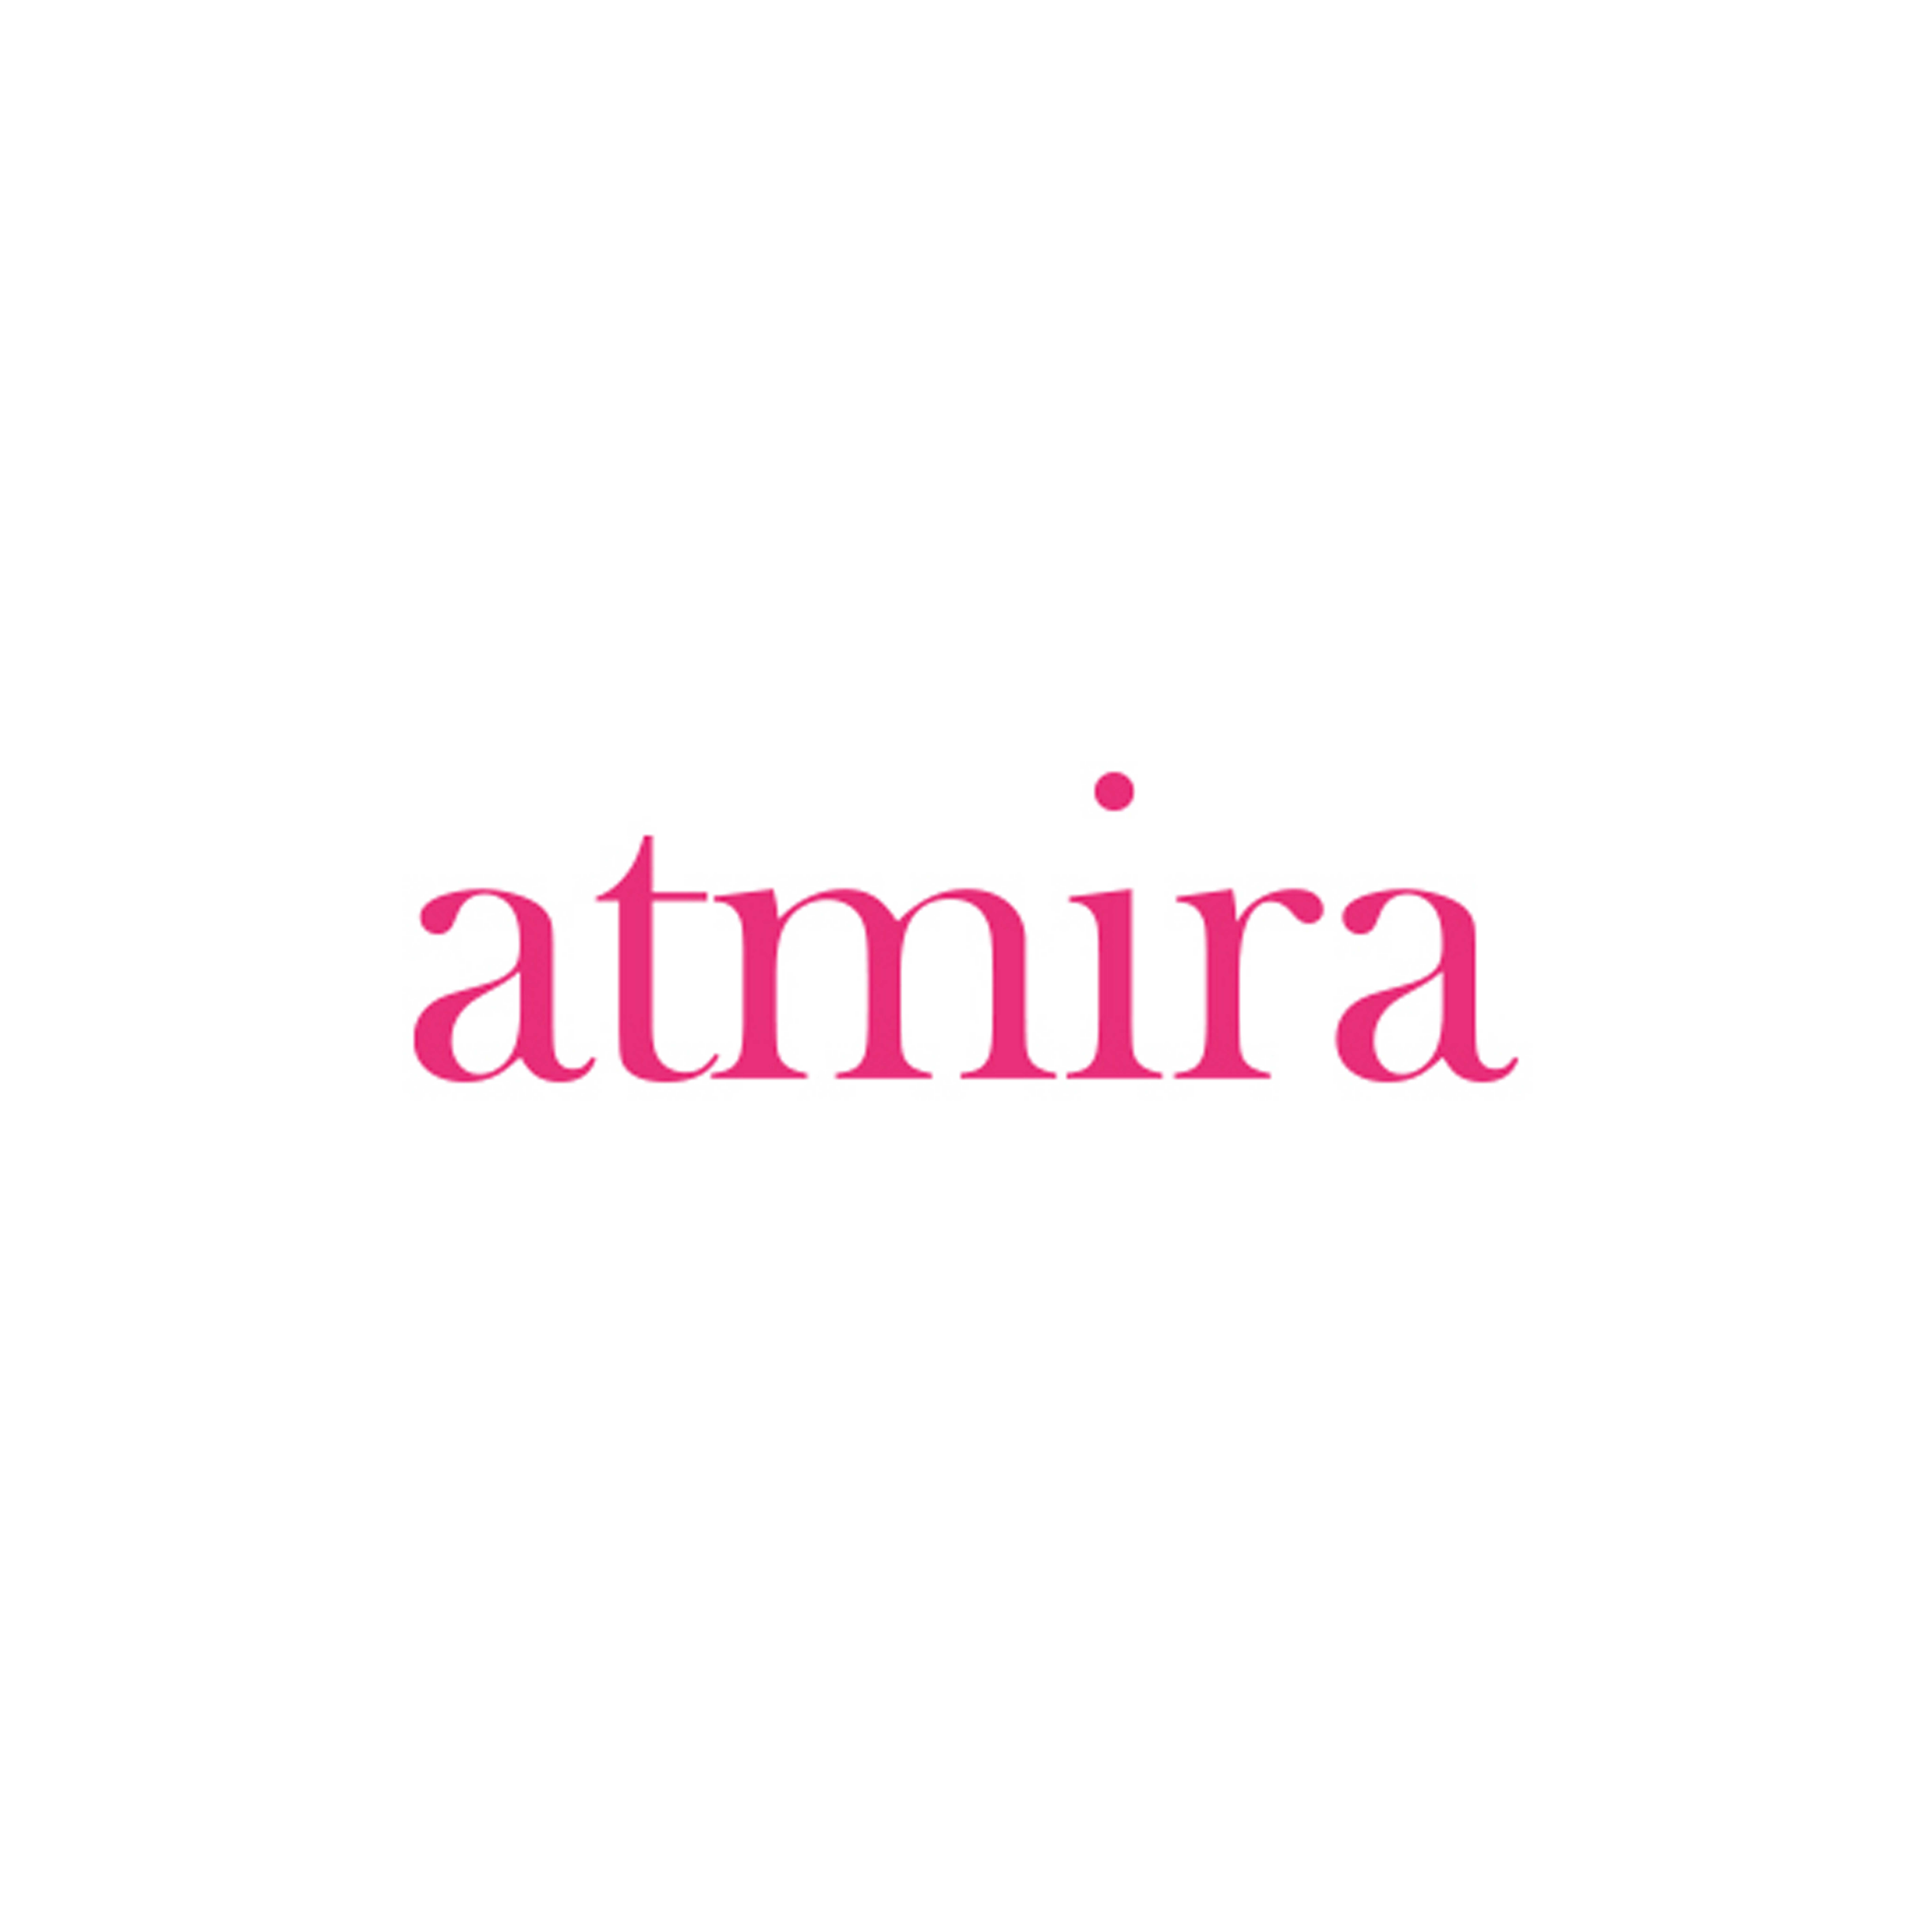 atmira-1.jpg